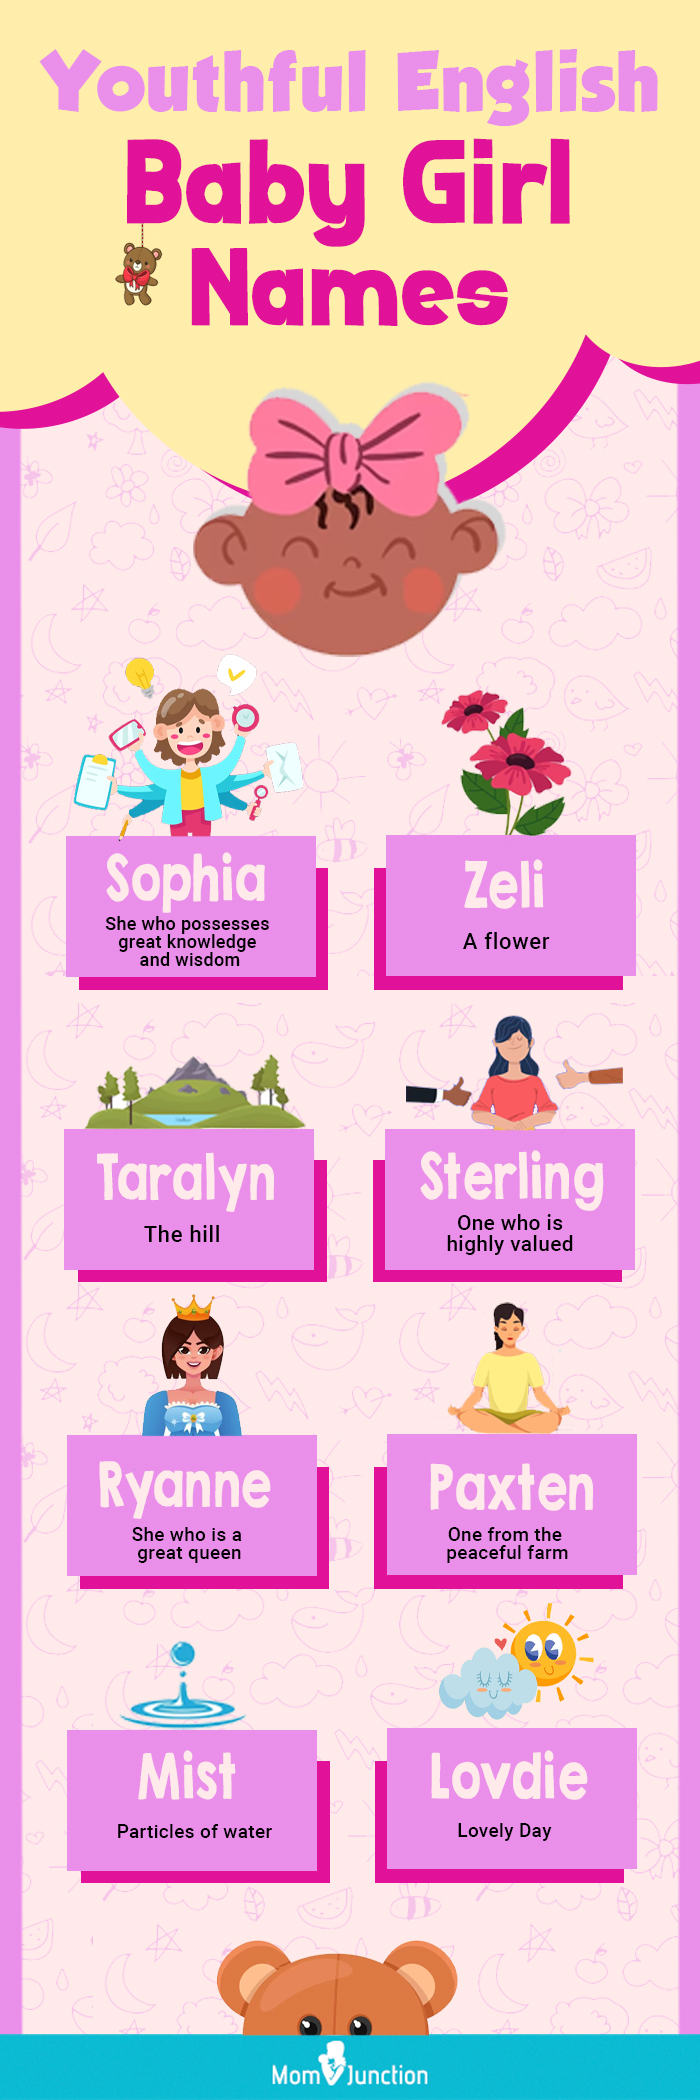 youthful english baby girl names (infographic)